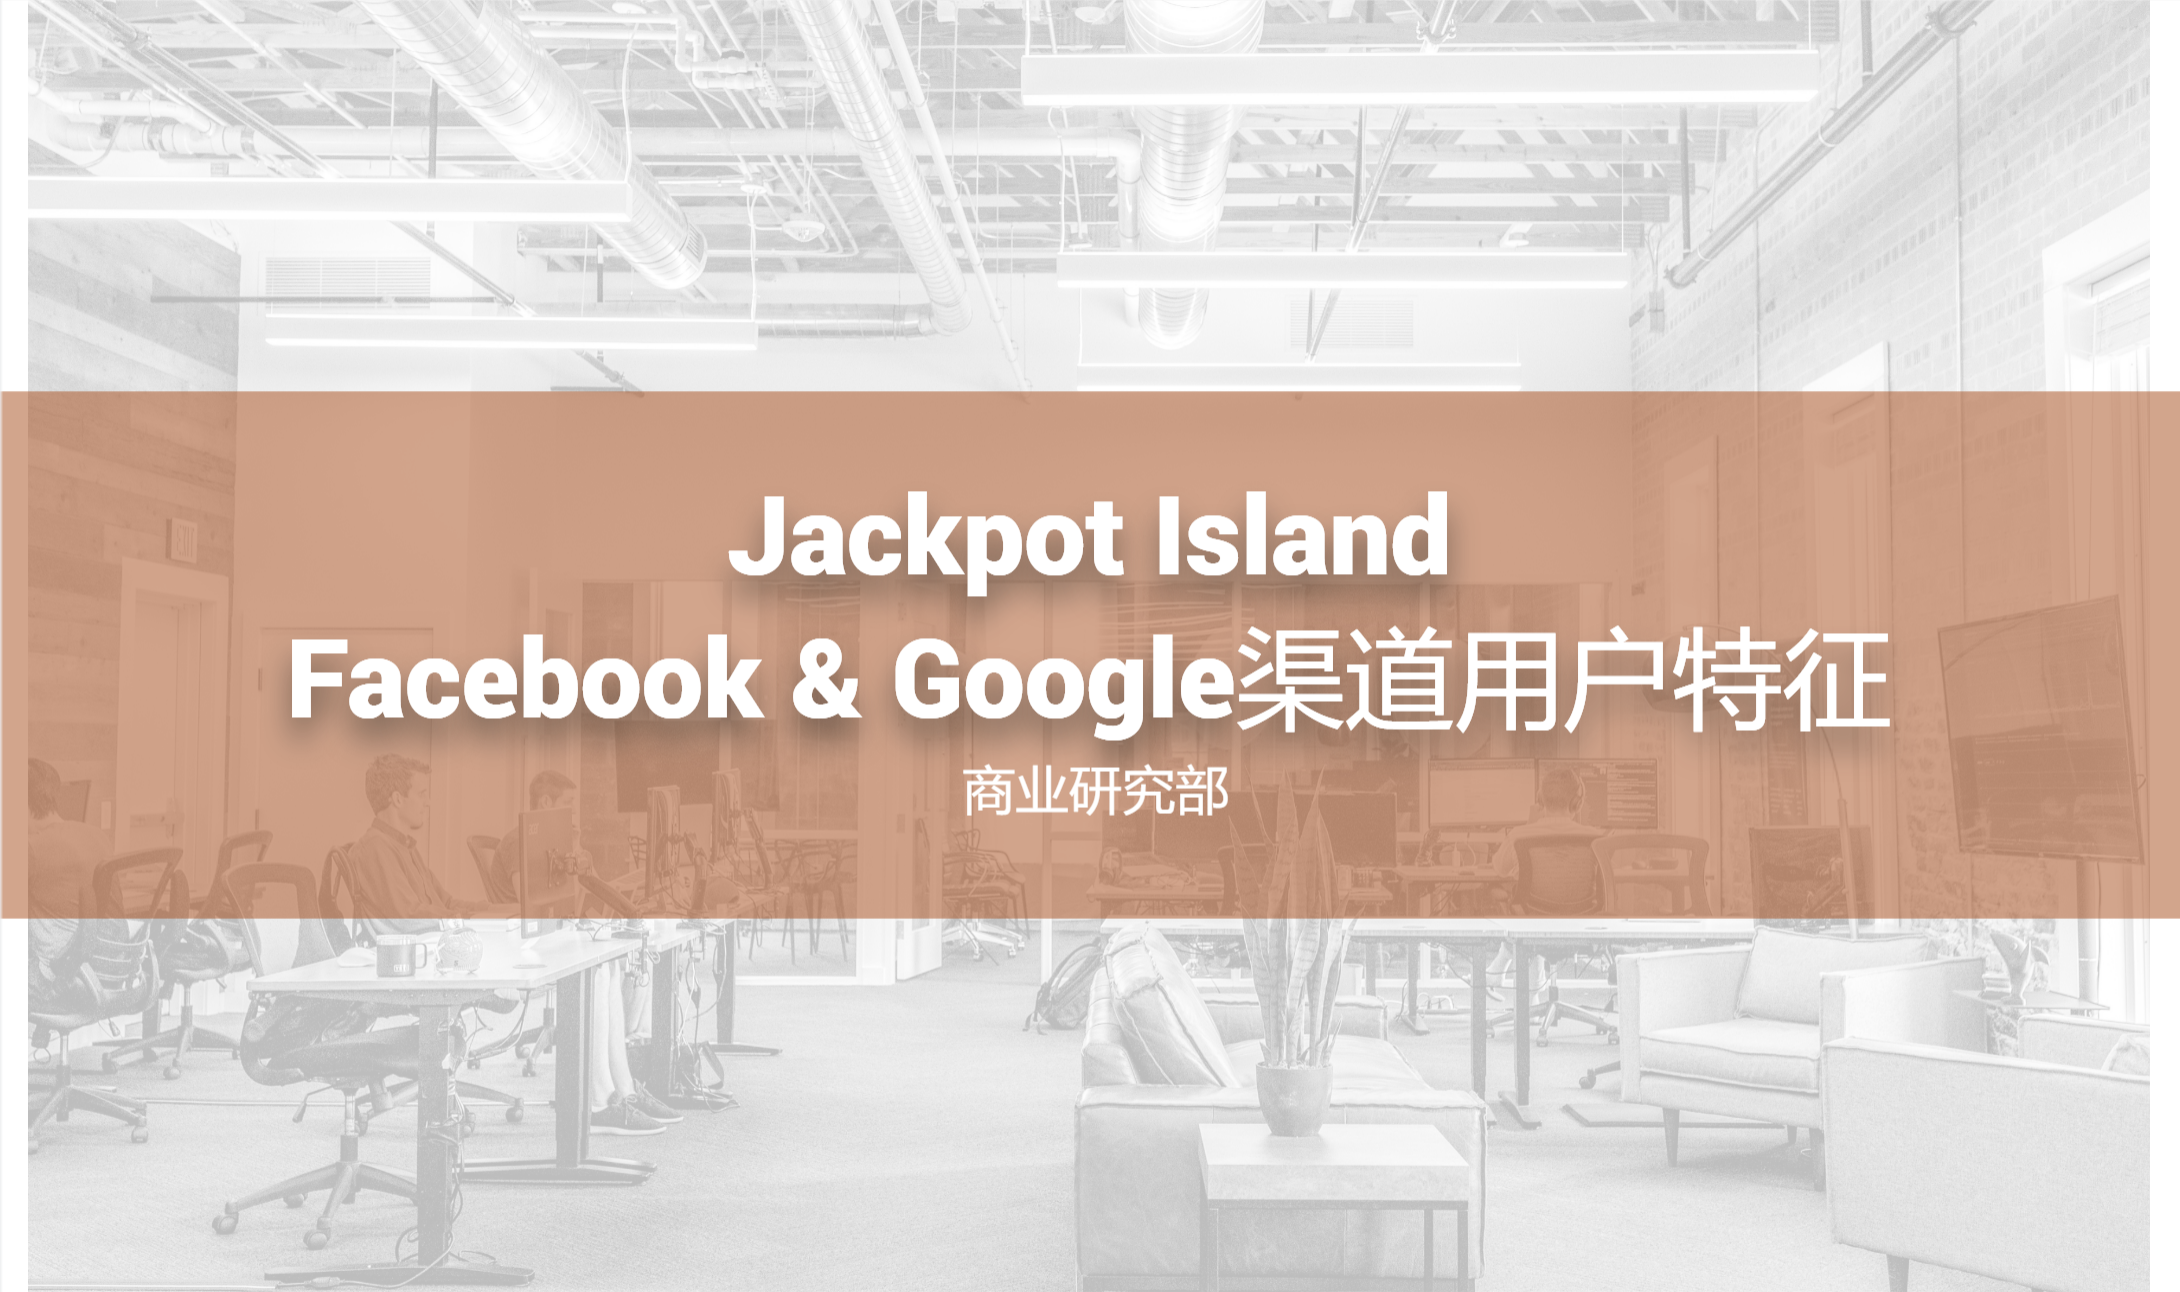 Jackpot Island-Facebook & Google渠道用户特征